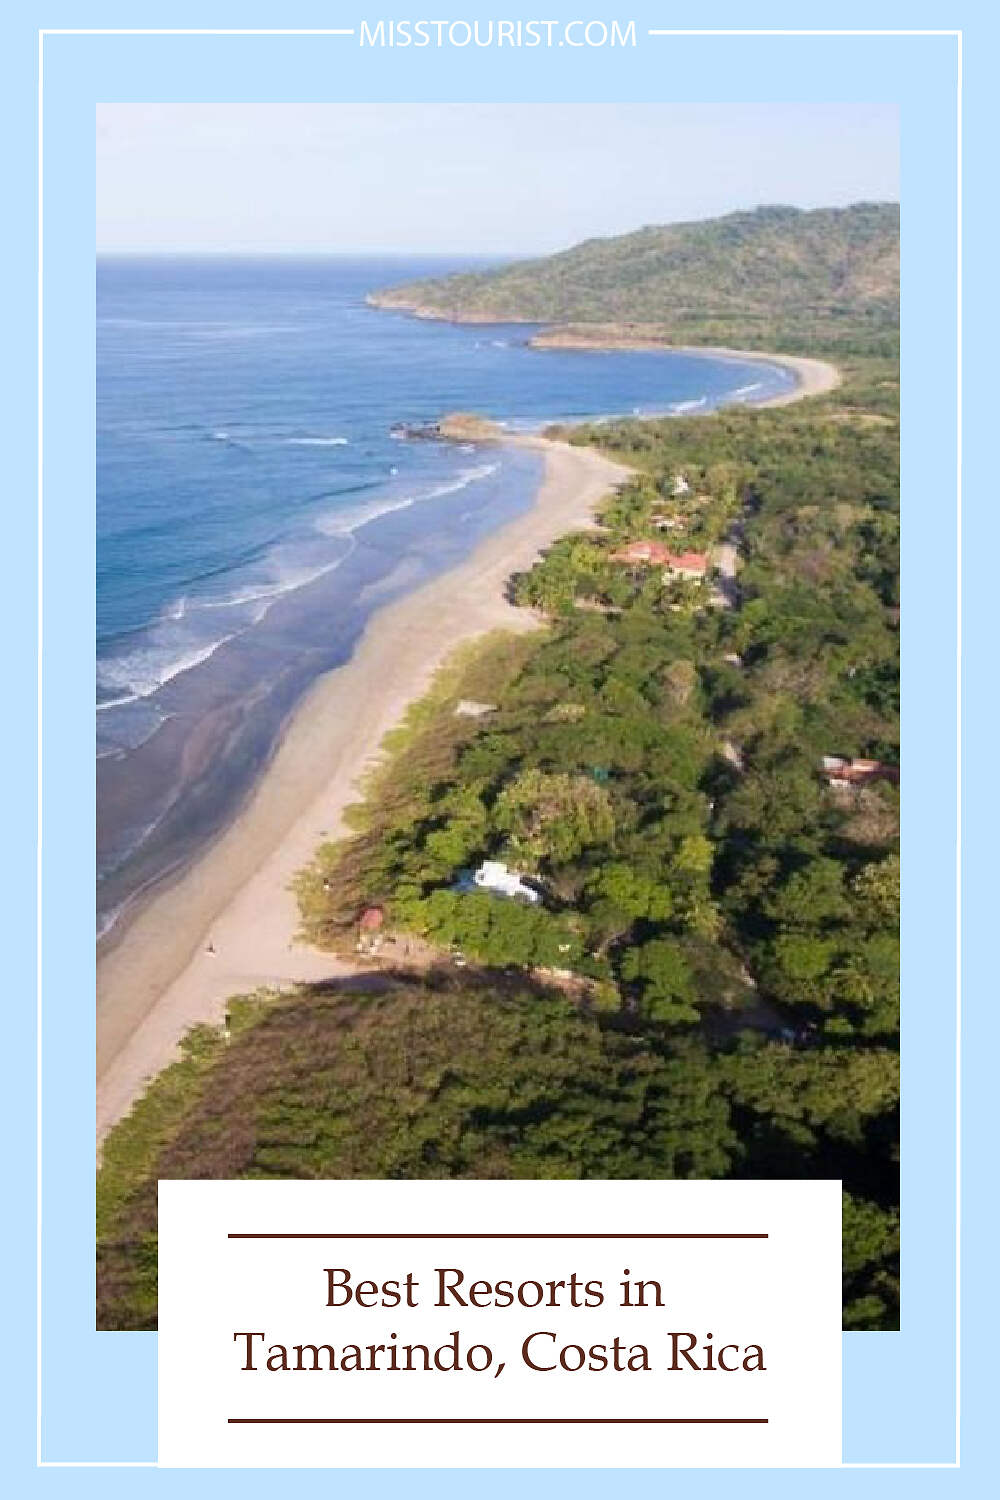 Tamarindo Costa Rica resorts pin 2